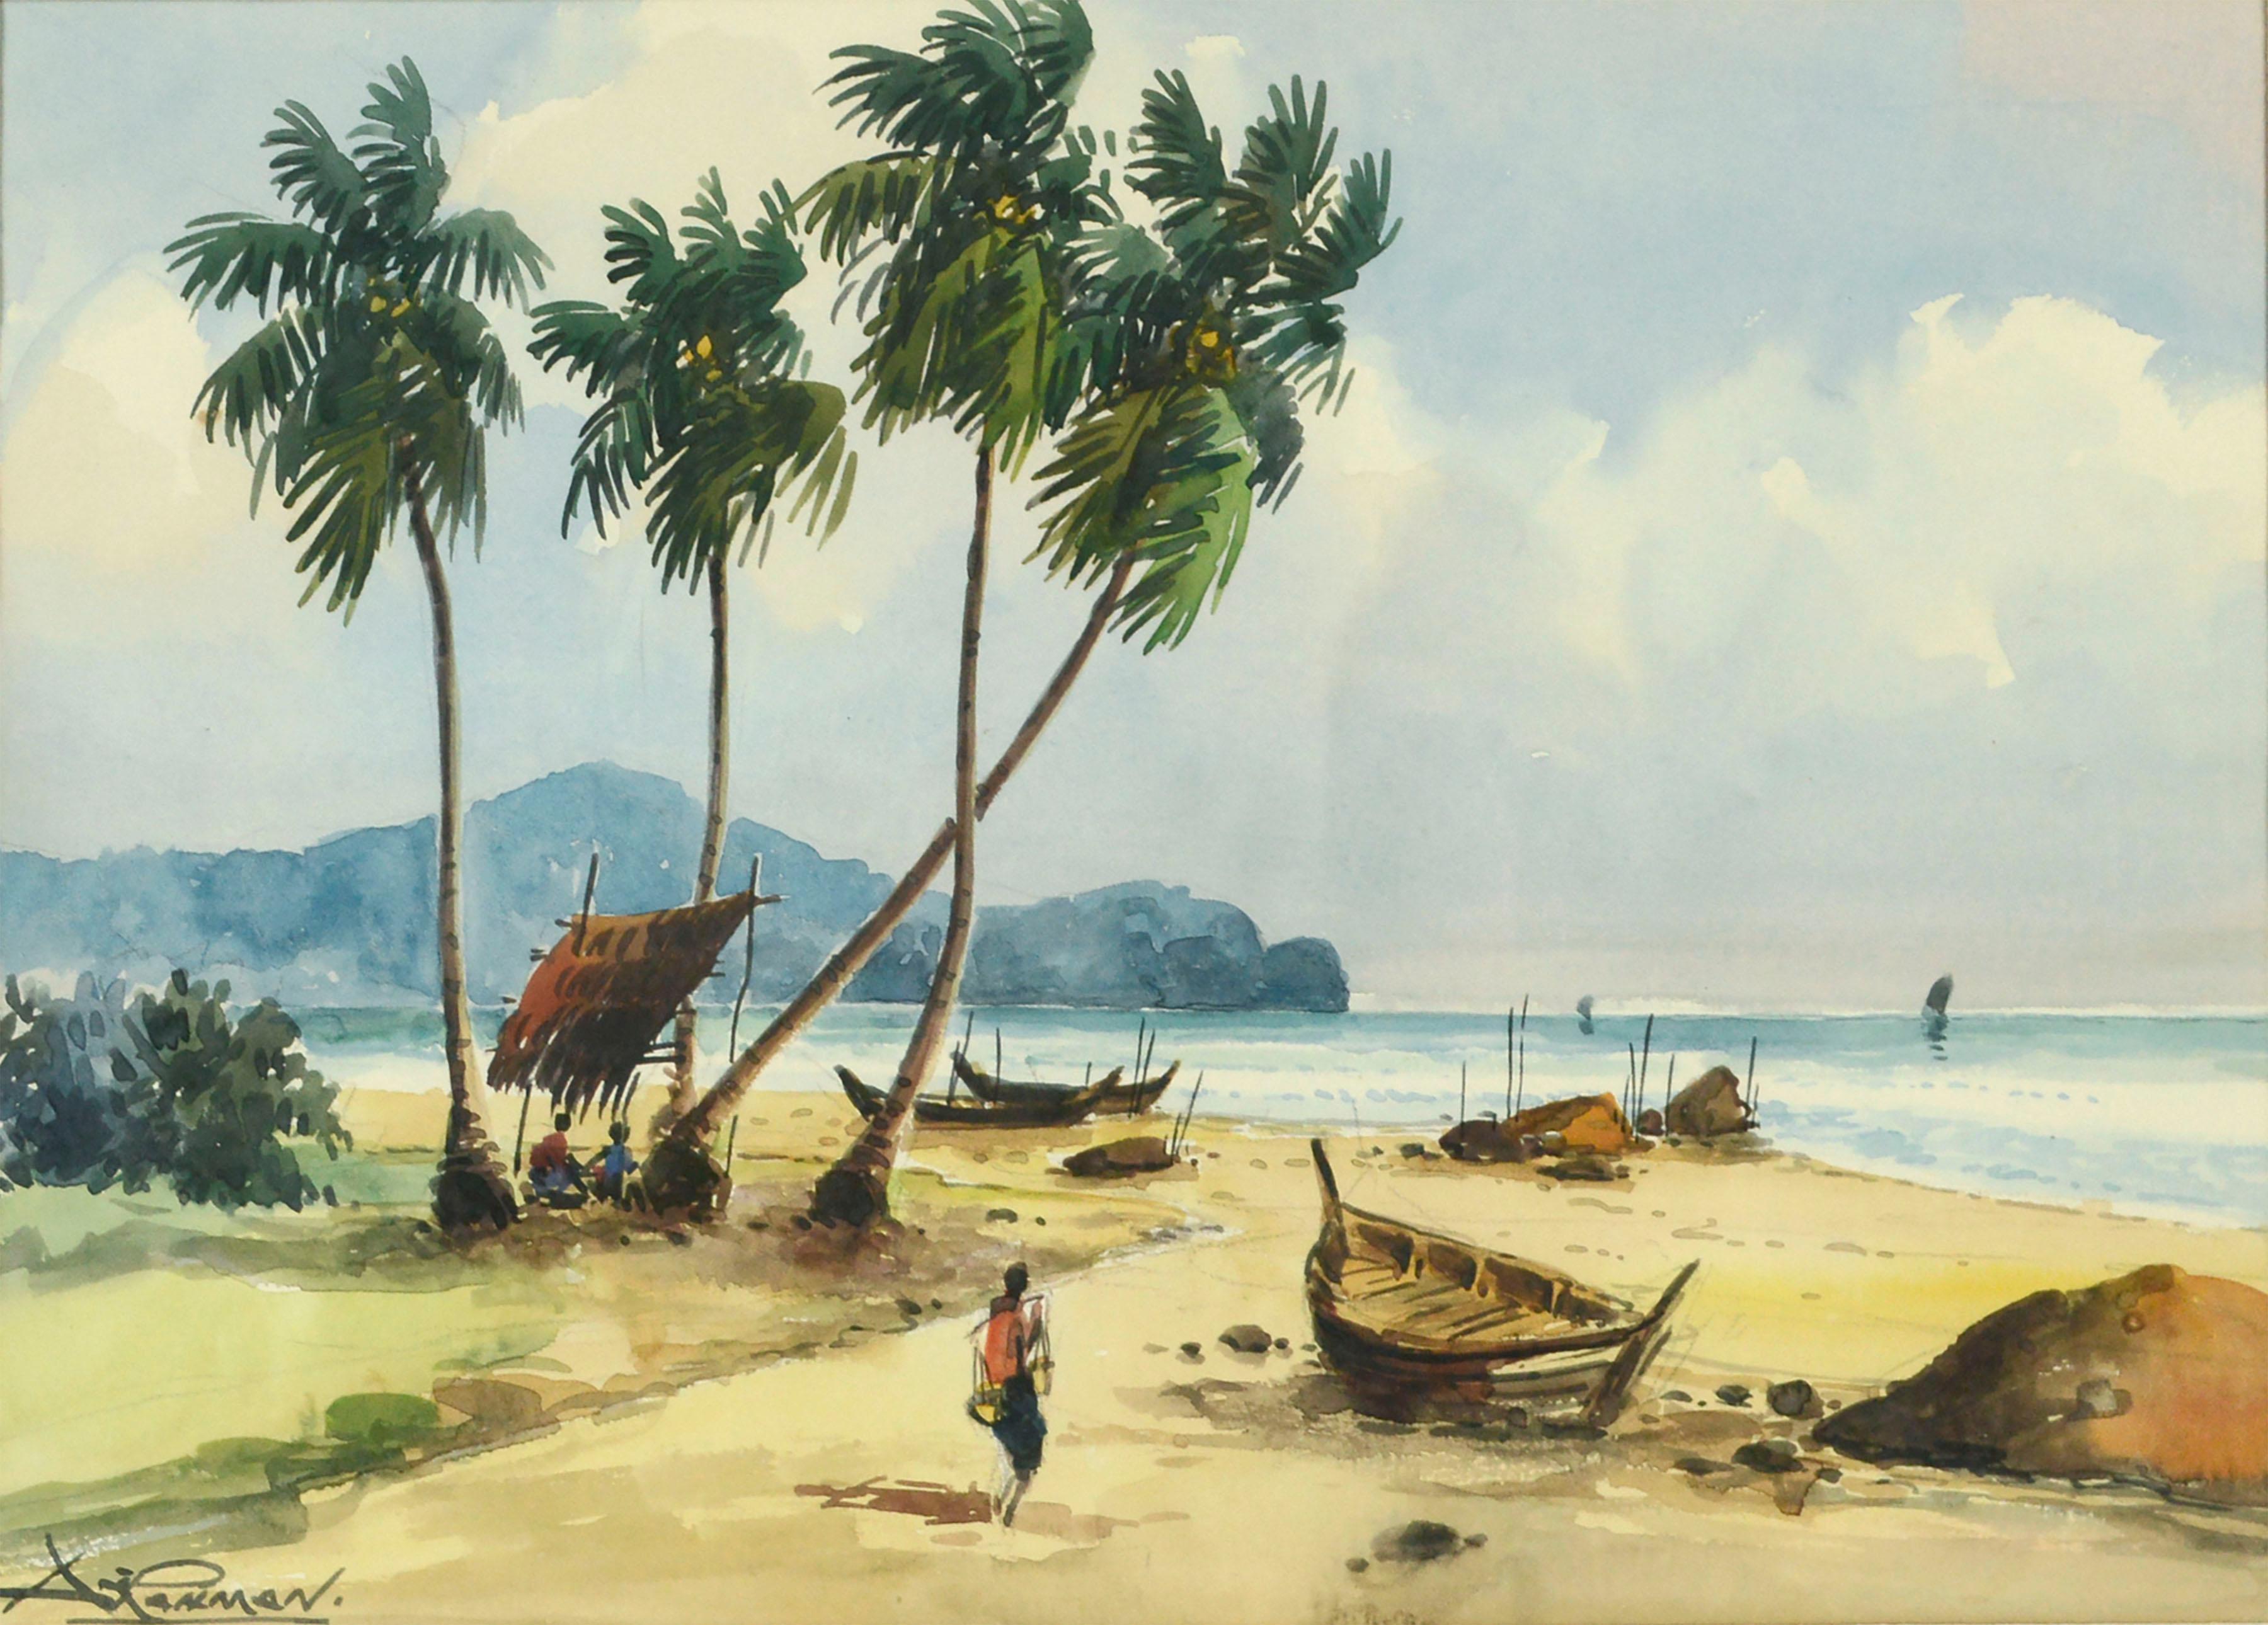 Figures on the Beach, Mid Century East Java Indonesia Coast Landscape Watercolor - Art by Amang Rahman Jubair